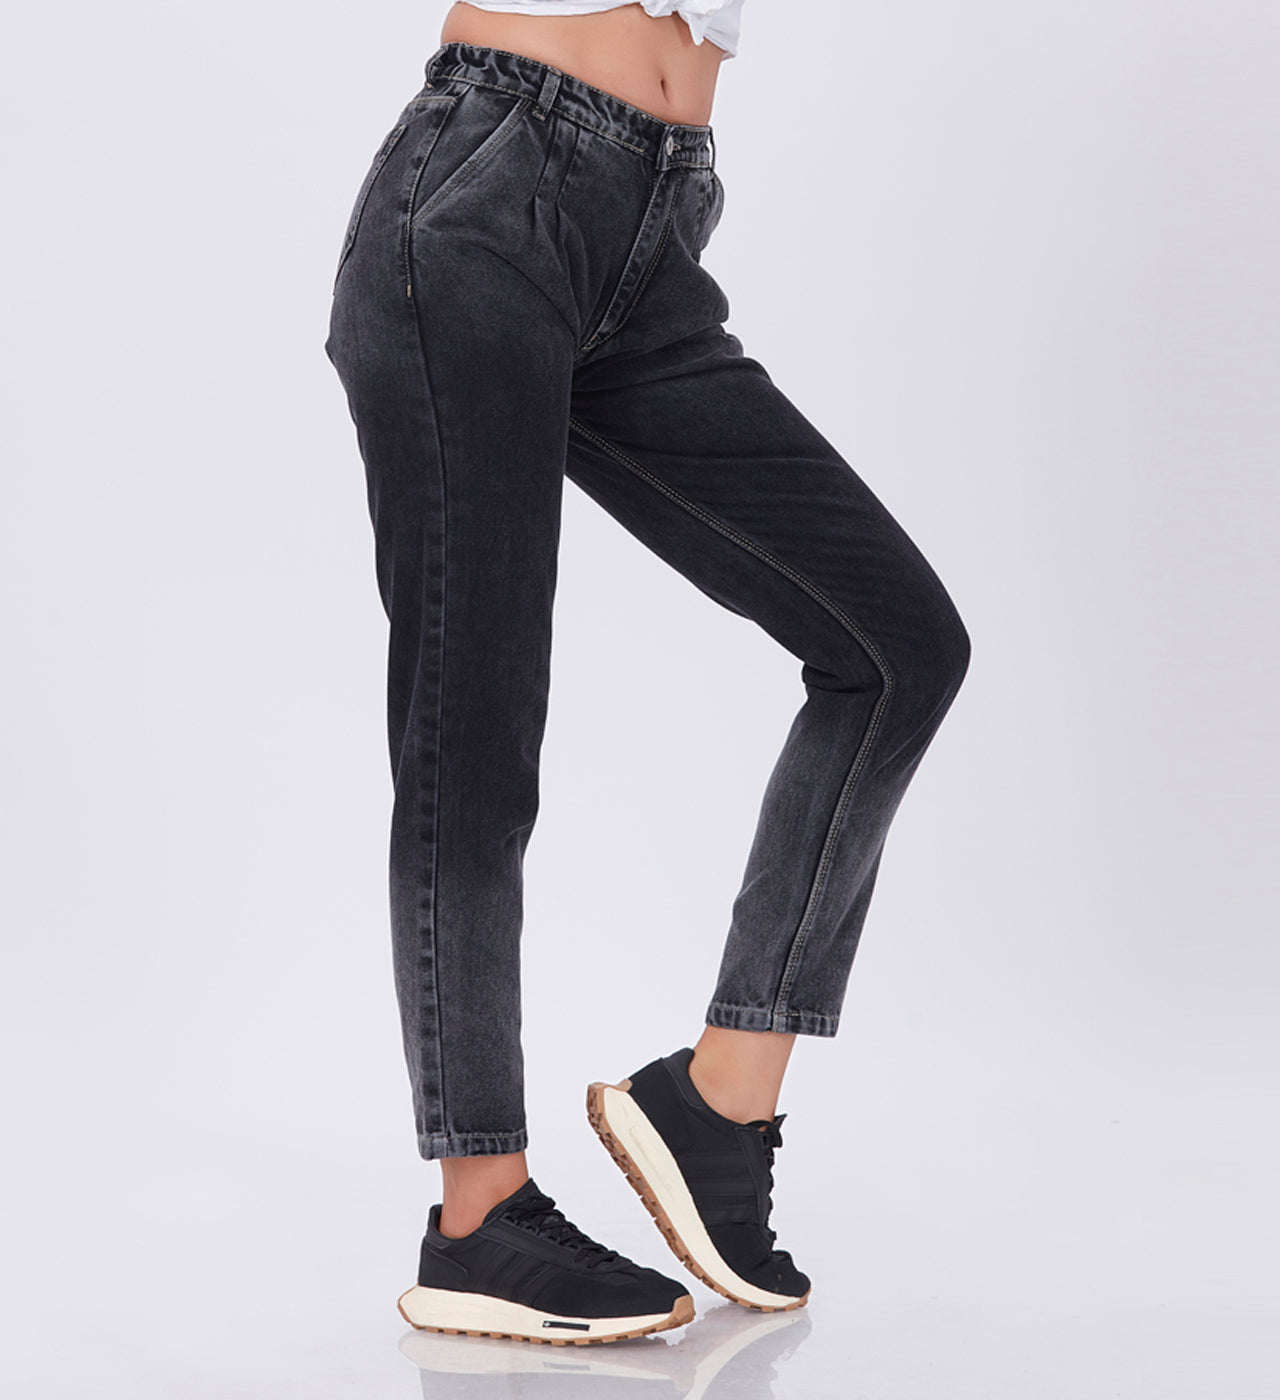 Billie Jeans - High Waisted Cotton Distressed Mom Denim Jeans in Black Wash  | Fashion, Fashion outfits, Black distressed jeans outfit